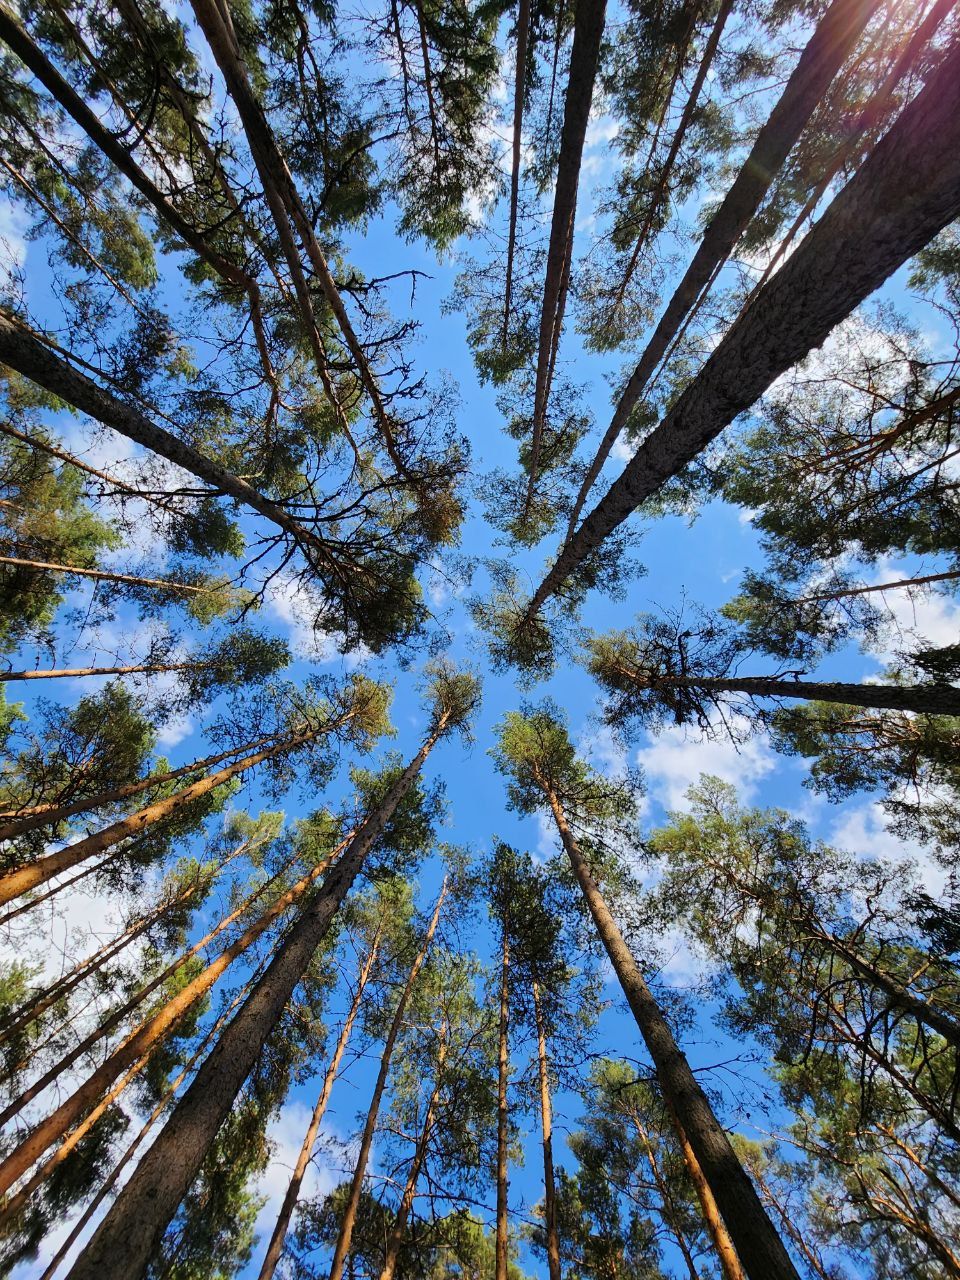 Sky through pines